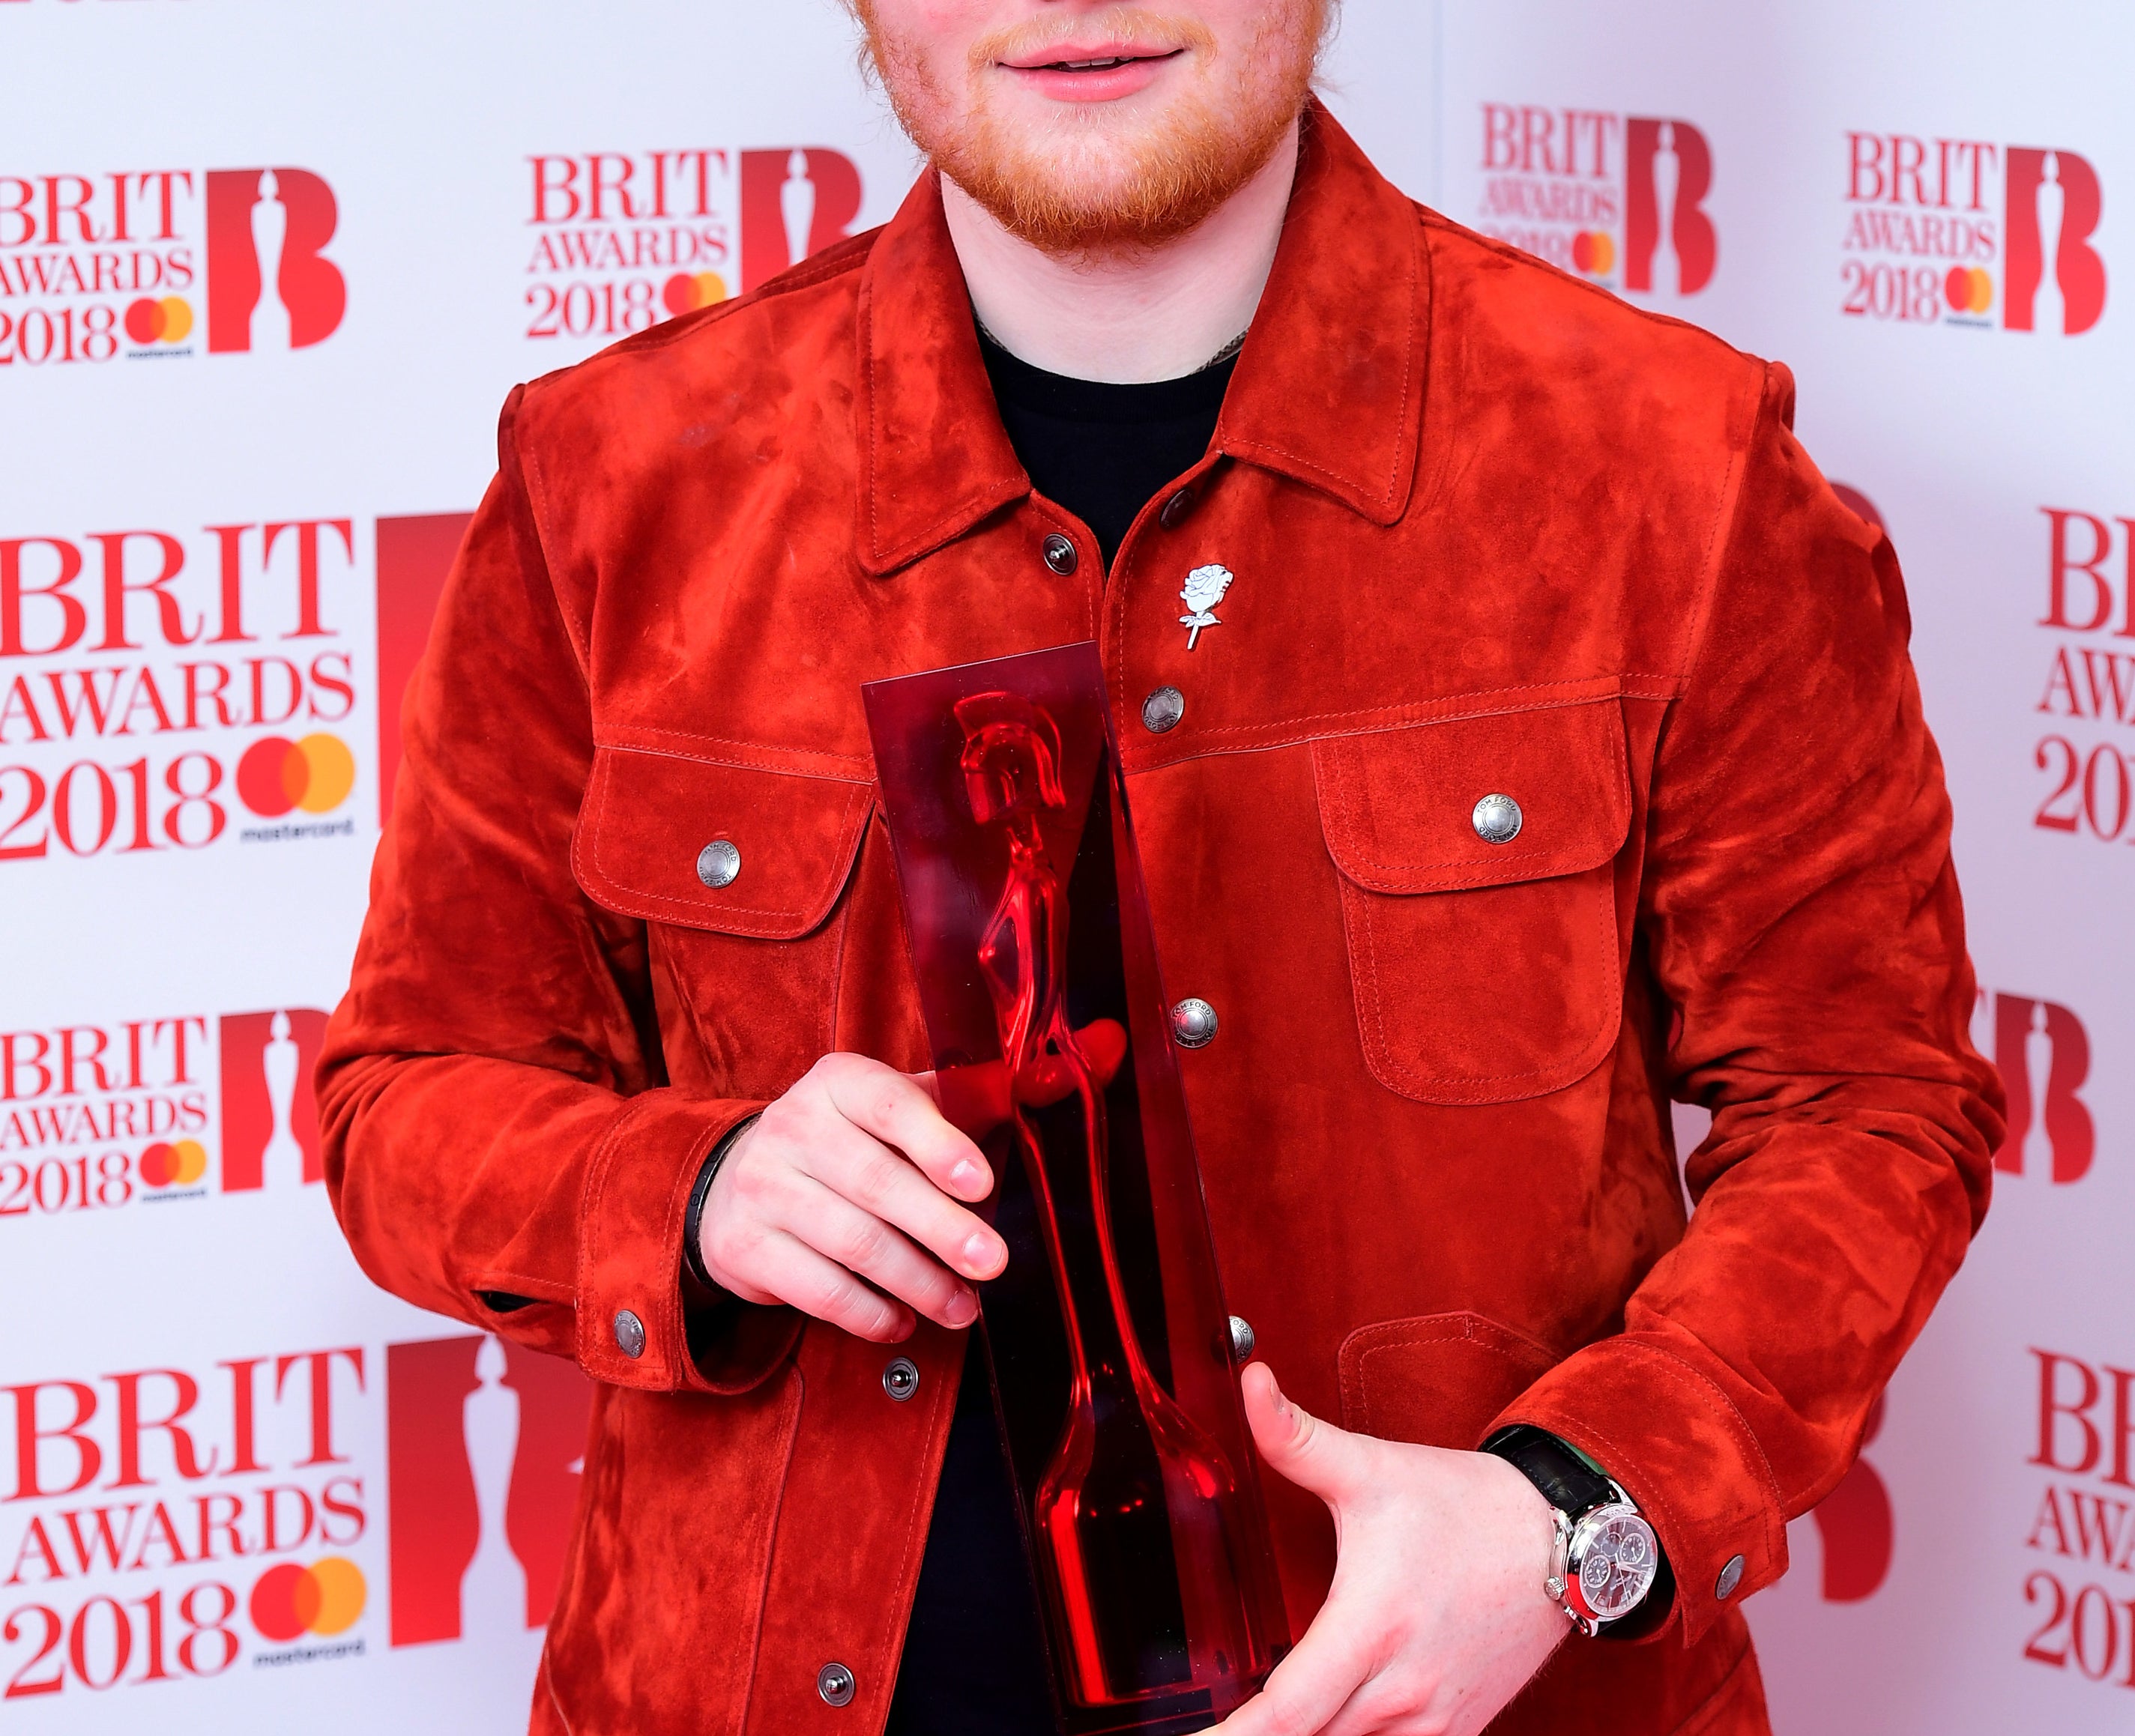 Ed holds up an award at the Brits